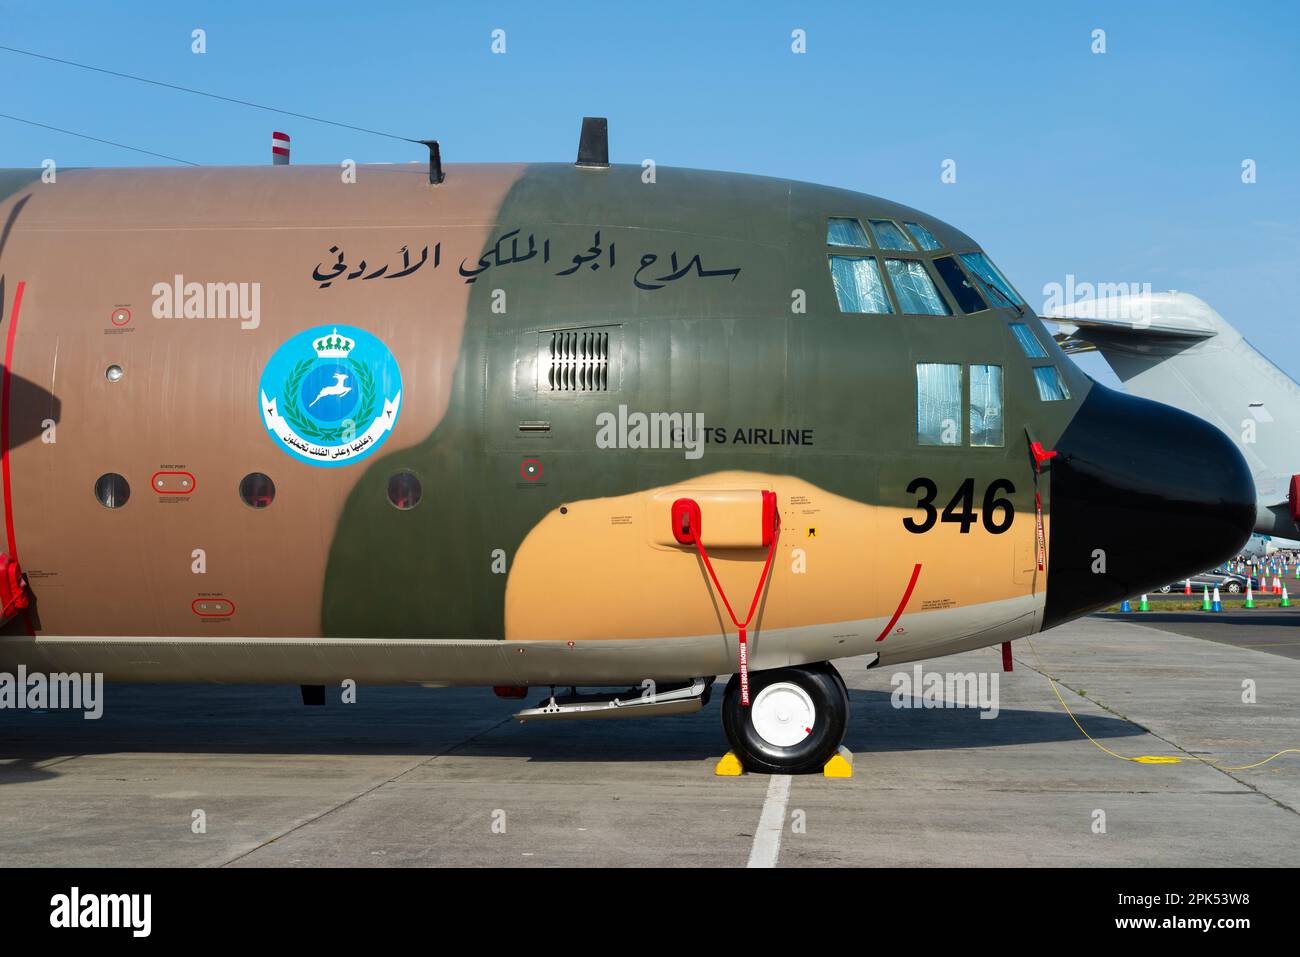 Royal jordanian airline fotografías e imágenes de alta resolución - Alamy